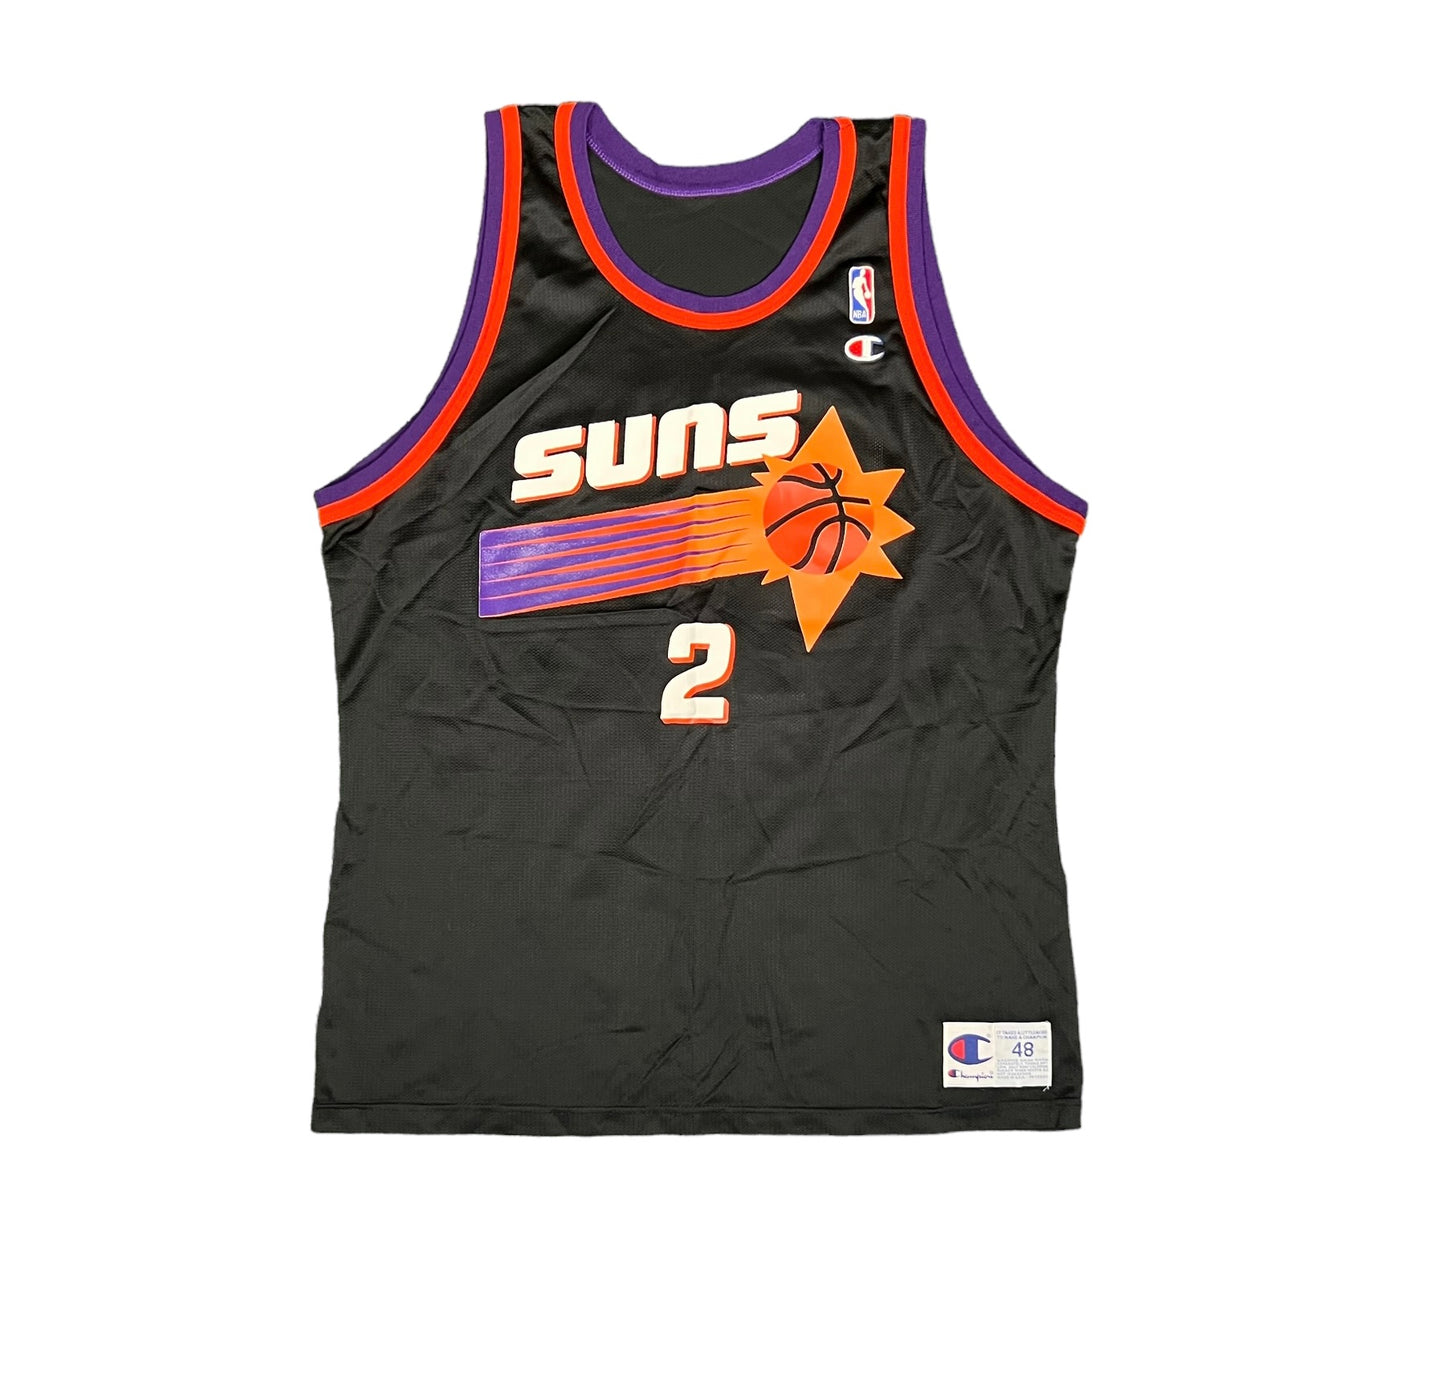 Phoenix Suns Elliot Perry Vintage Champion Jersey